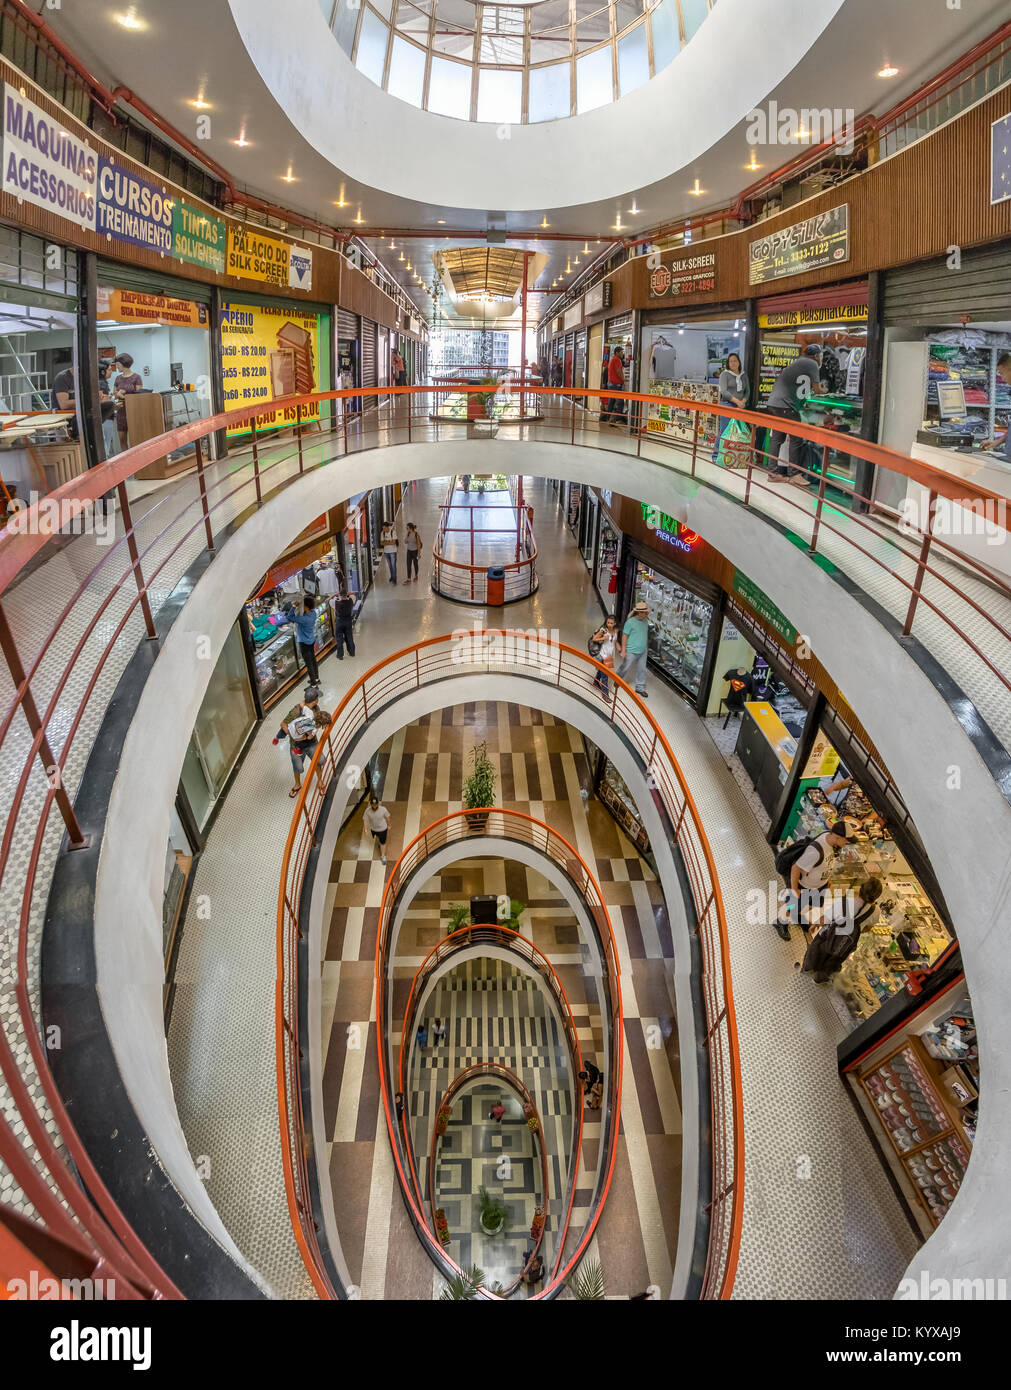 Galeria do Rock (Rock Gallery) Shopping Mall in Dowtown Sao Paulo - Sao Paulo, Brazil Stock Photo